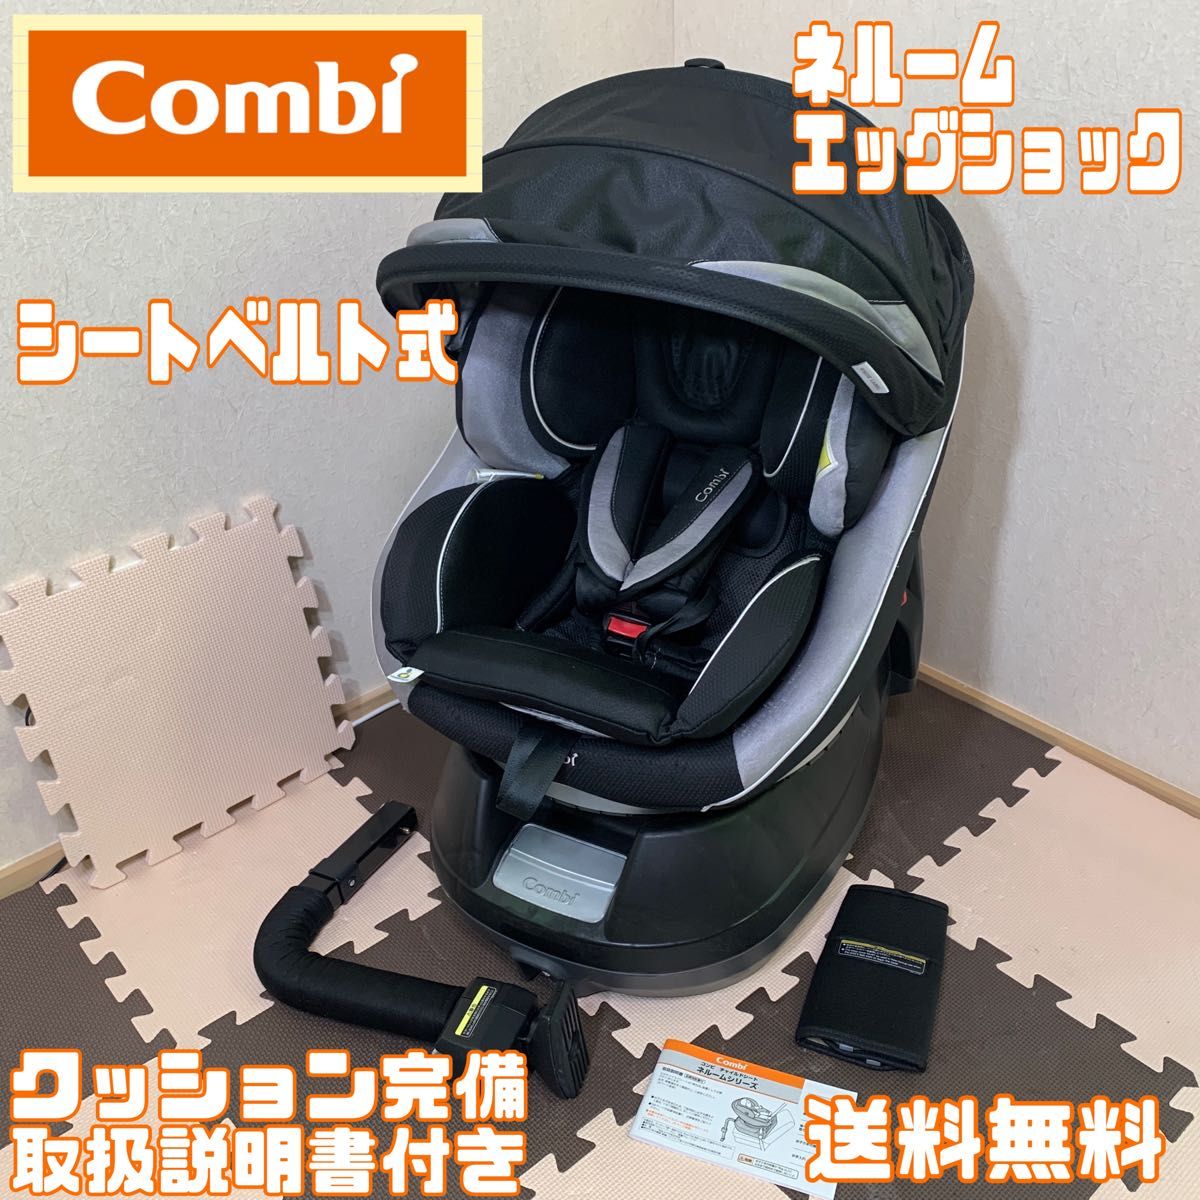 Combi コンビ ネルーム エッグショックNC-570 チャイルドシート 送料無料